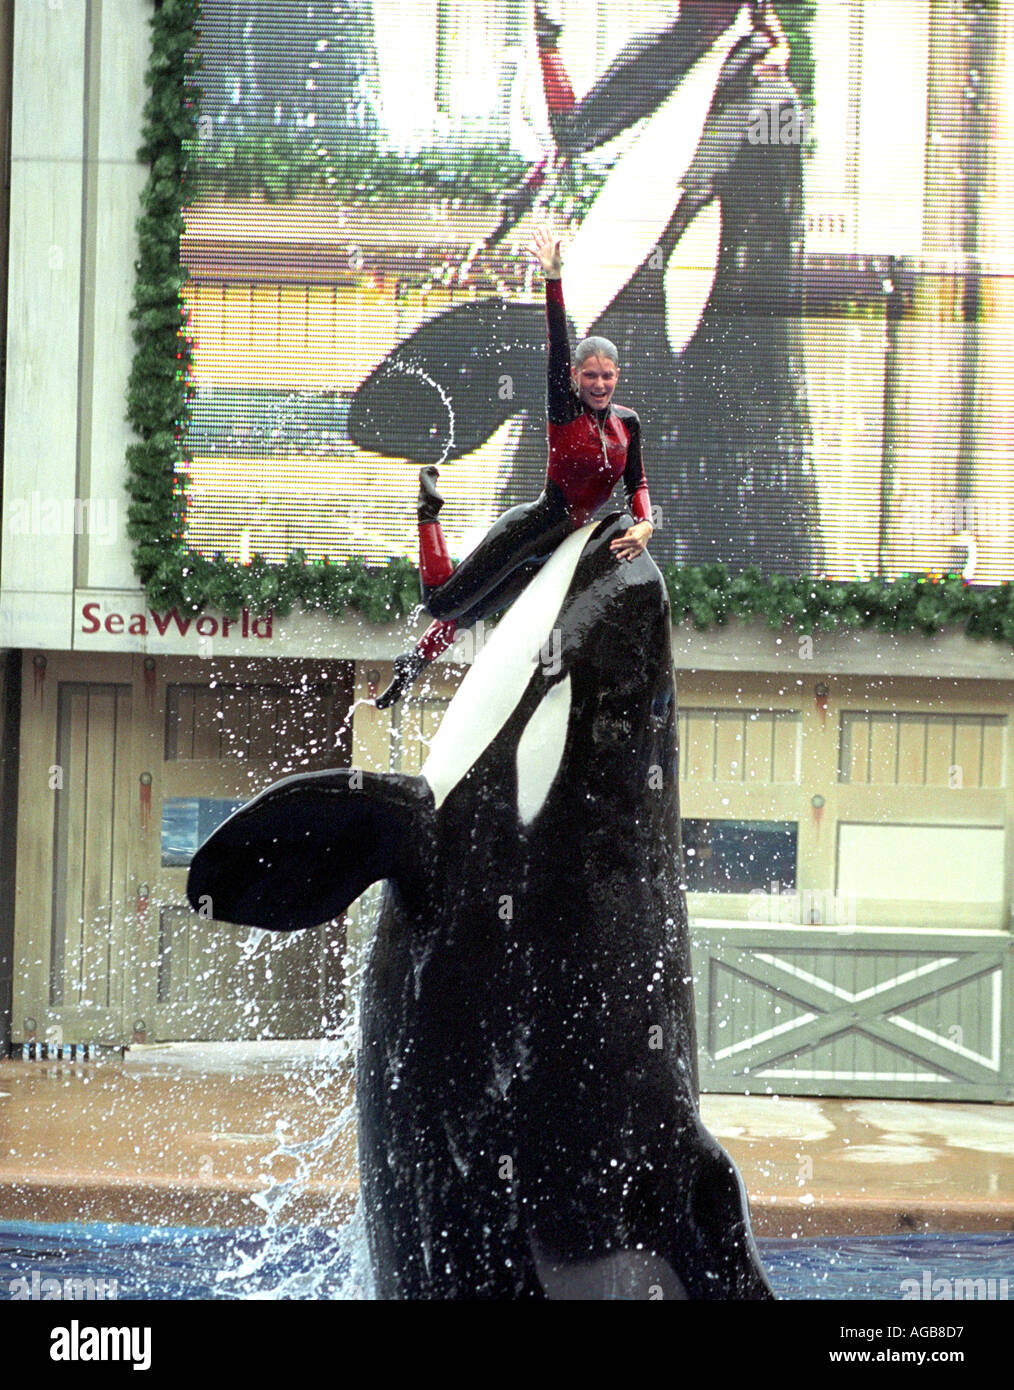 The Shamu Killer Whale show at SeaWorld in Florida USA Stock Photo